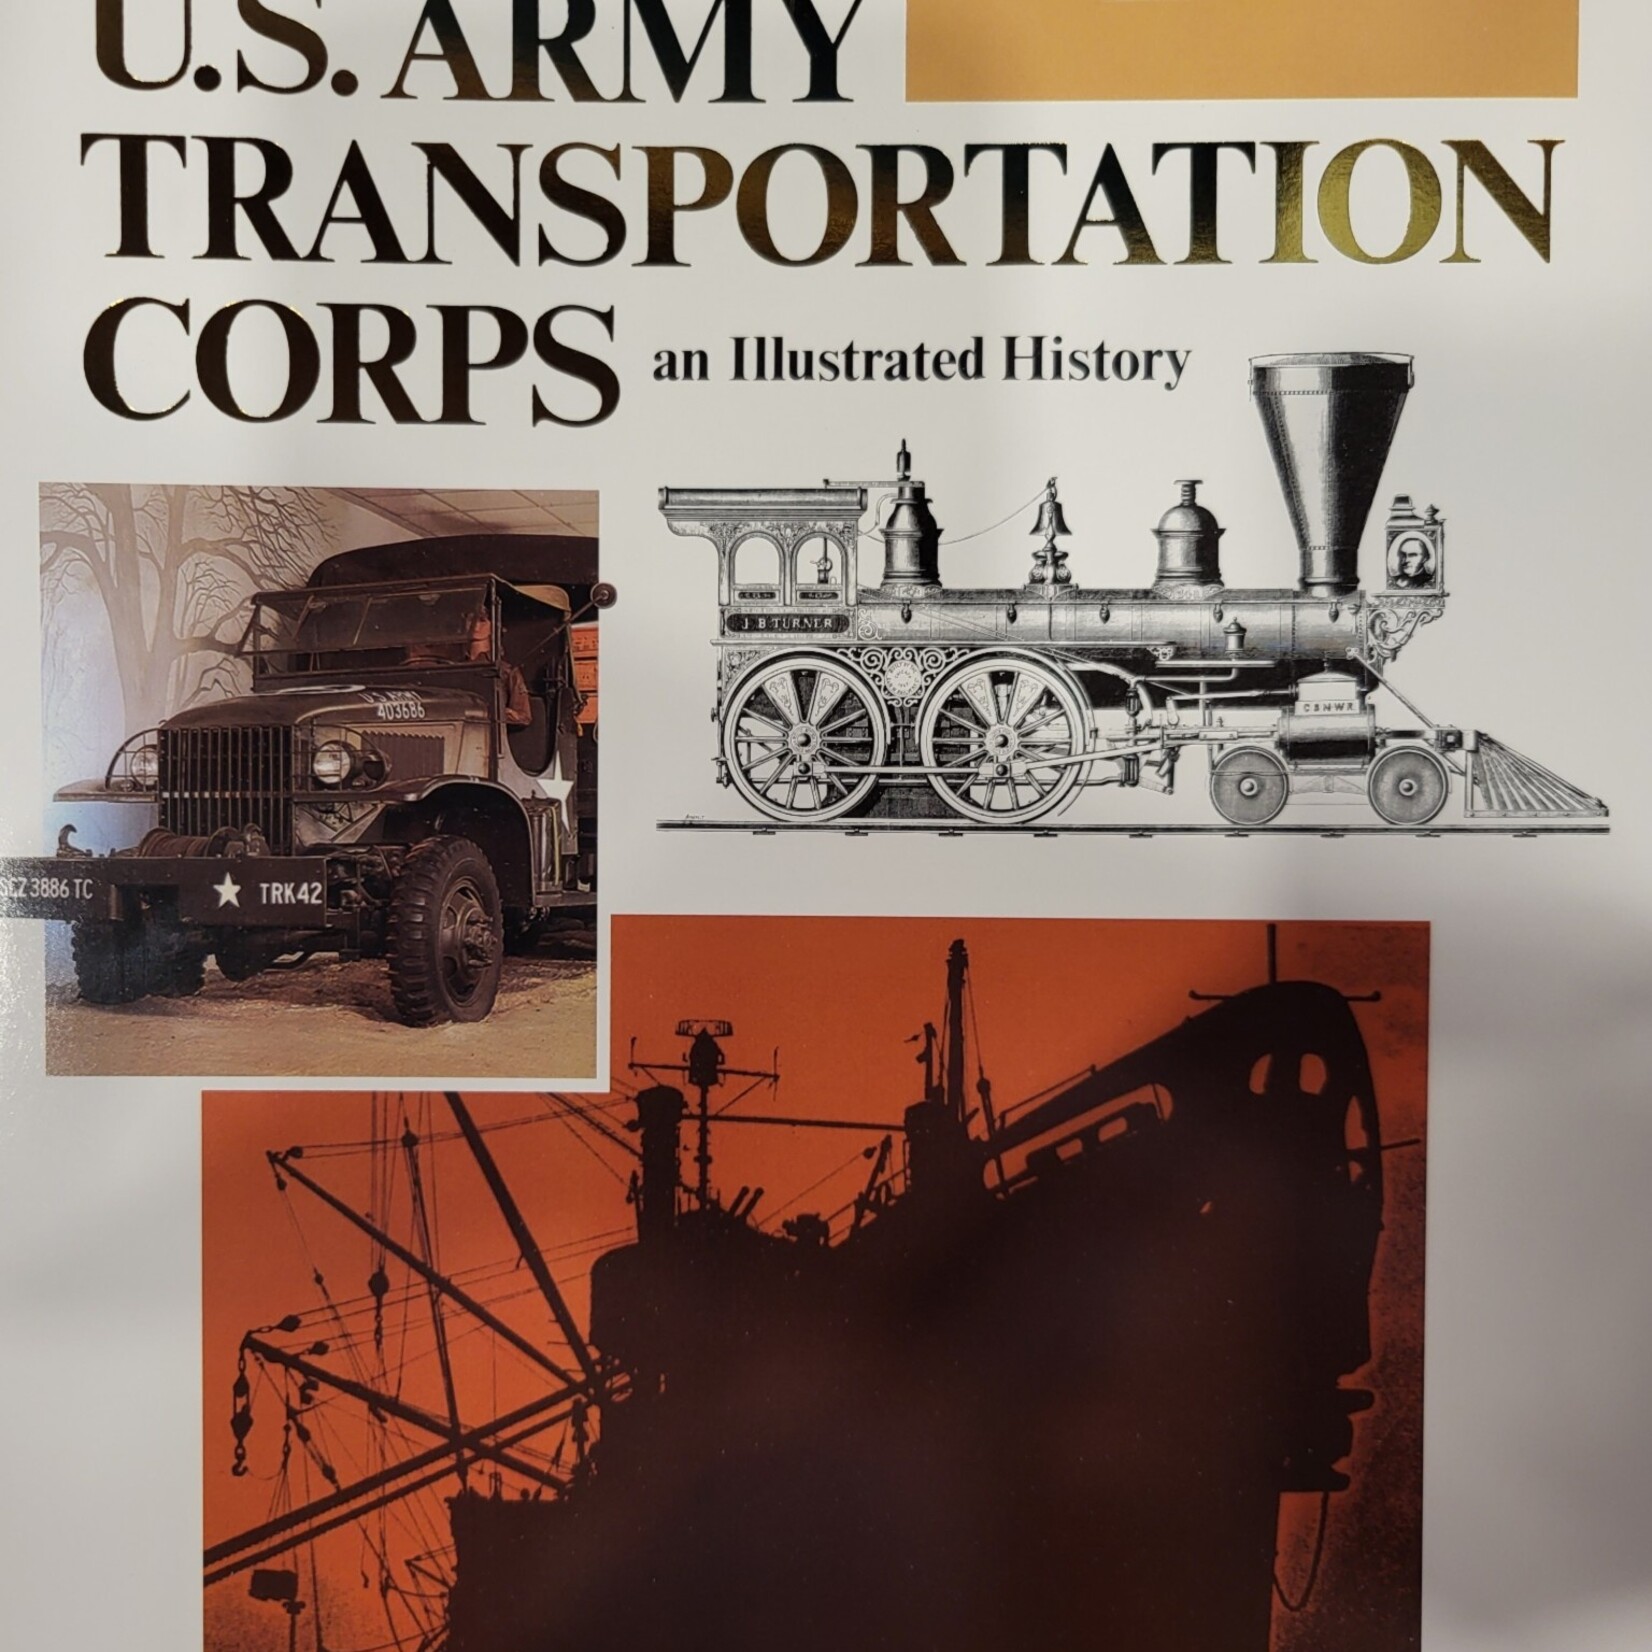 U.S. ARMY TRANSPORTATION CORPS